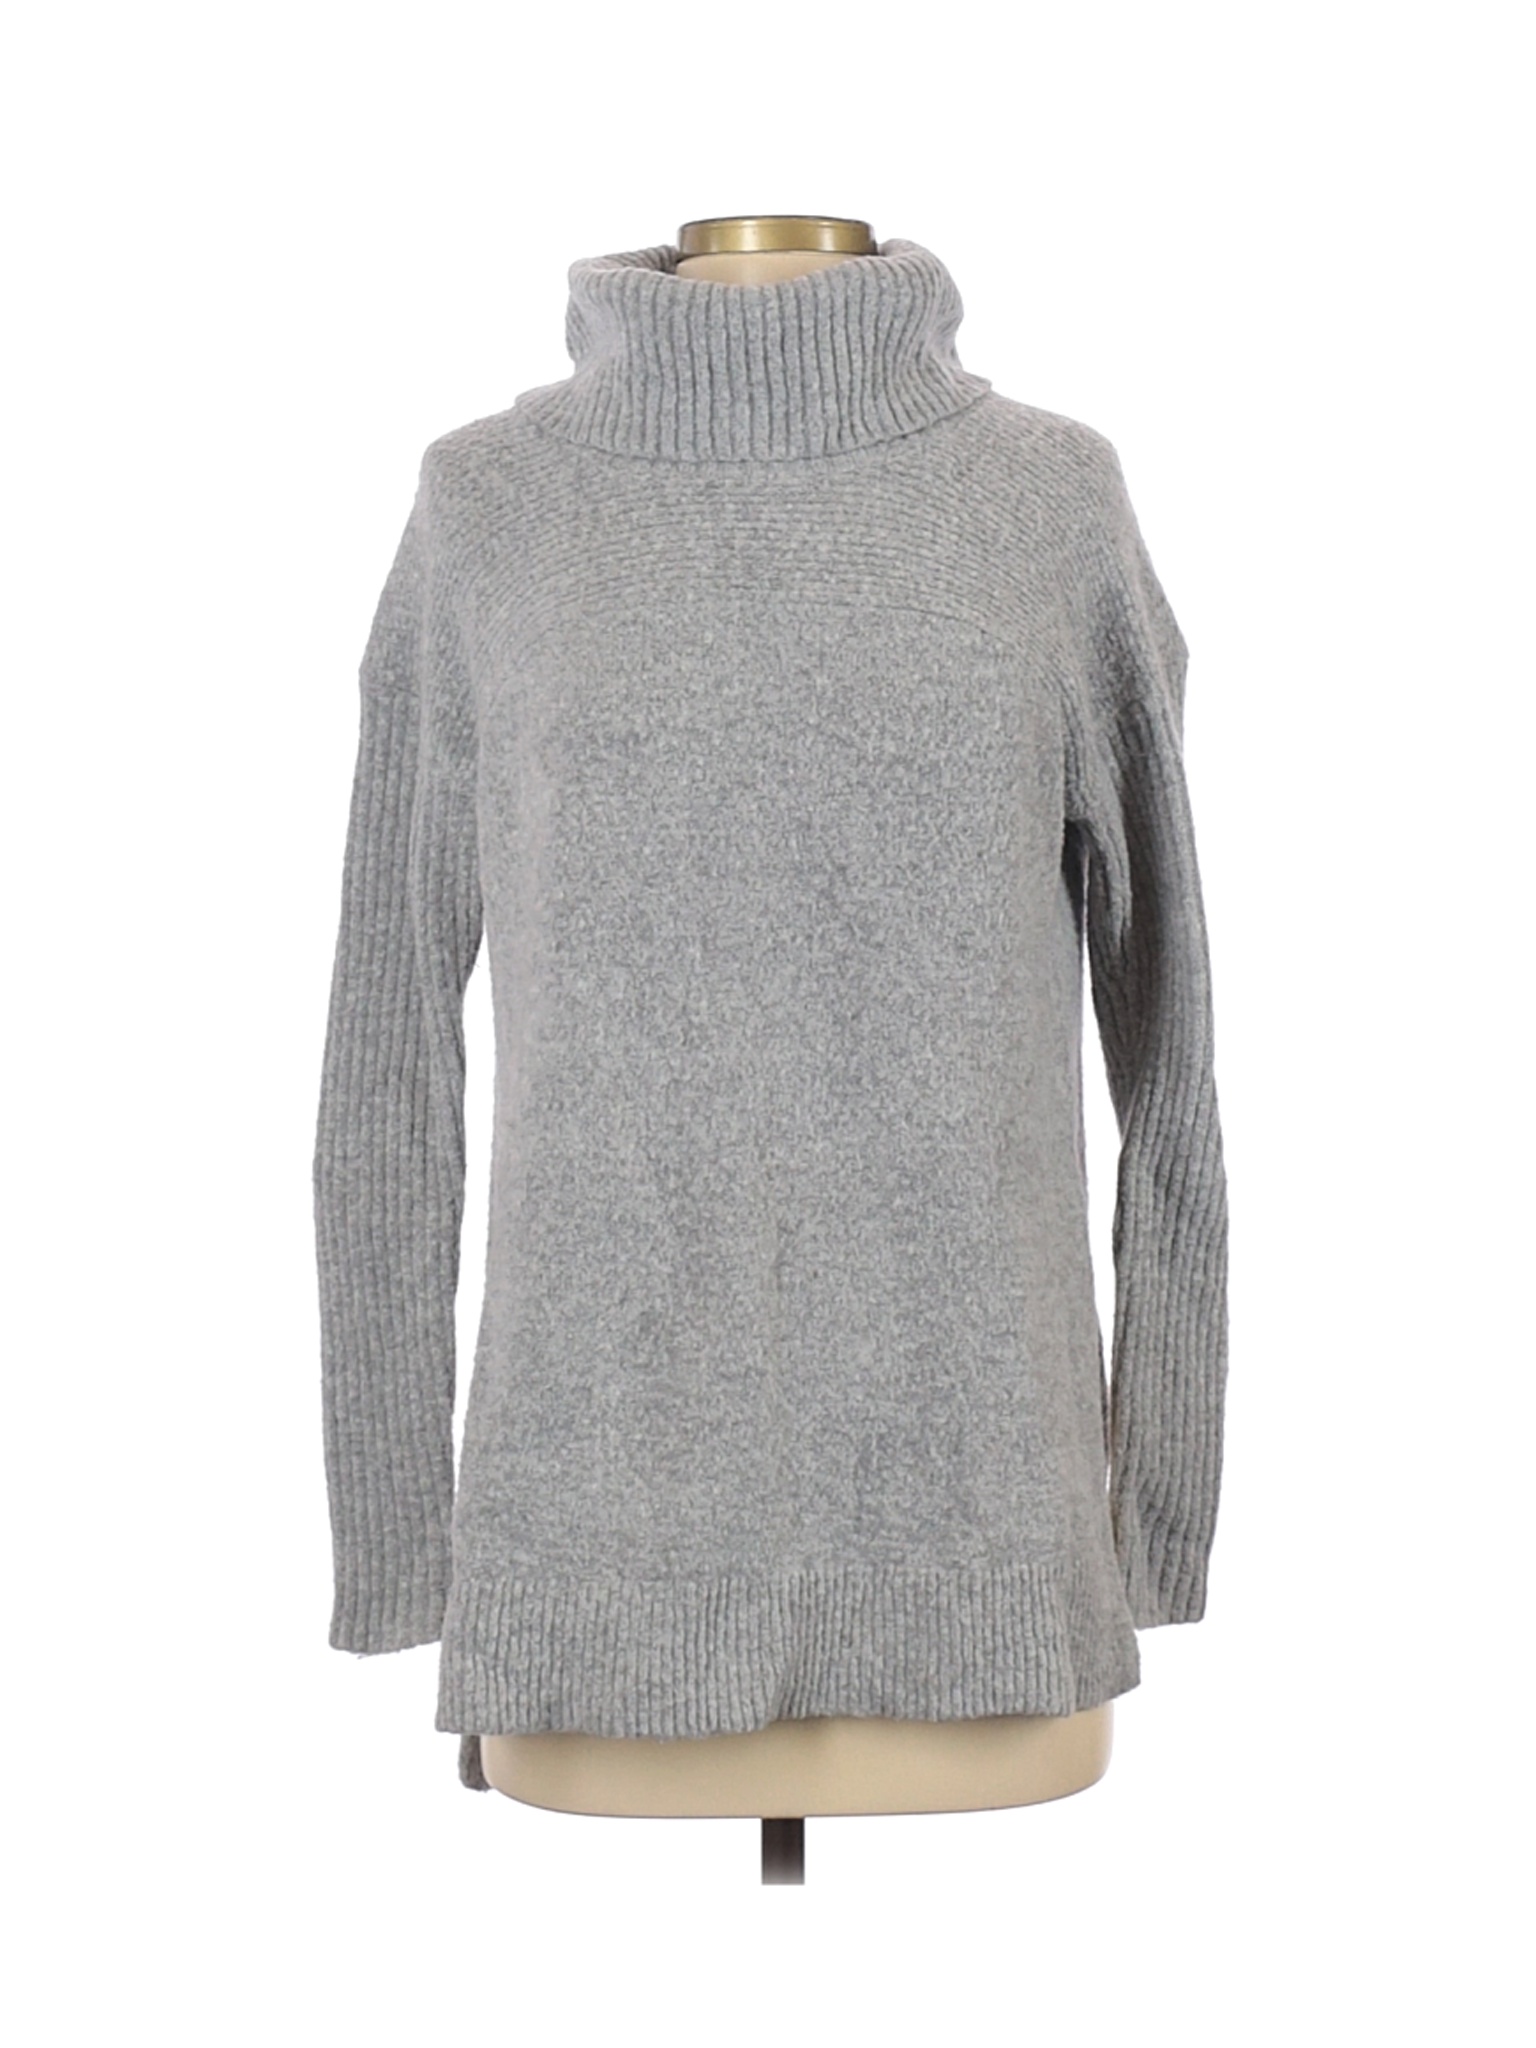 American Eagle Outfitters Women Gray Turtleneck Sweater S | eBay